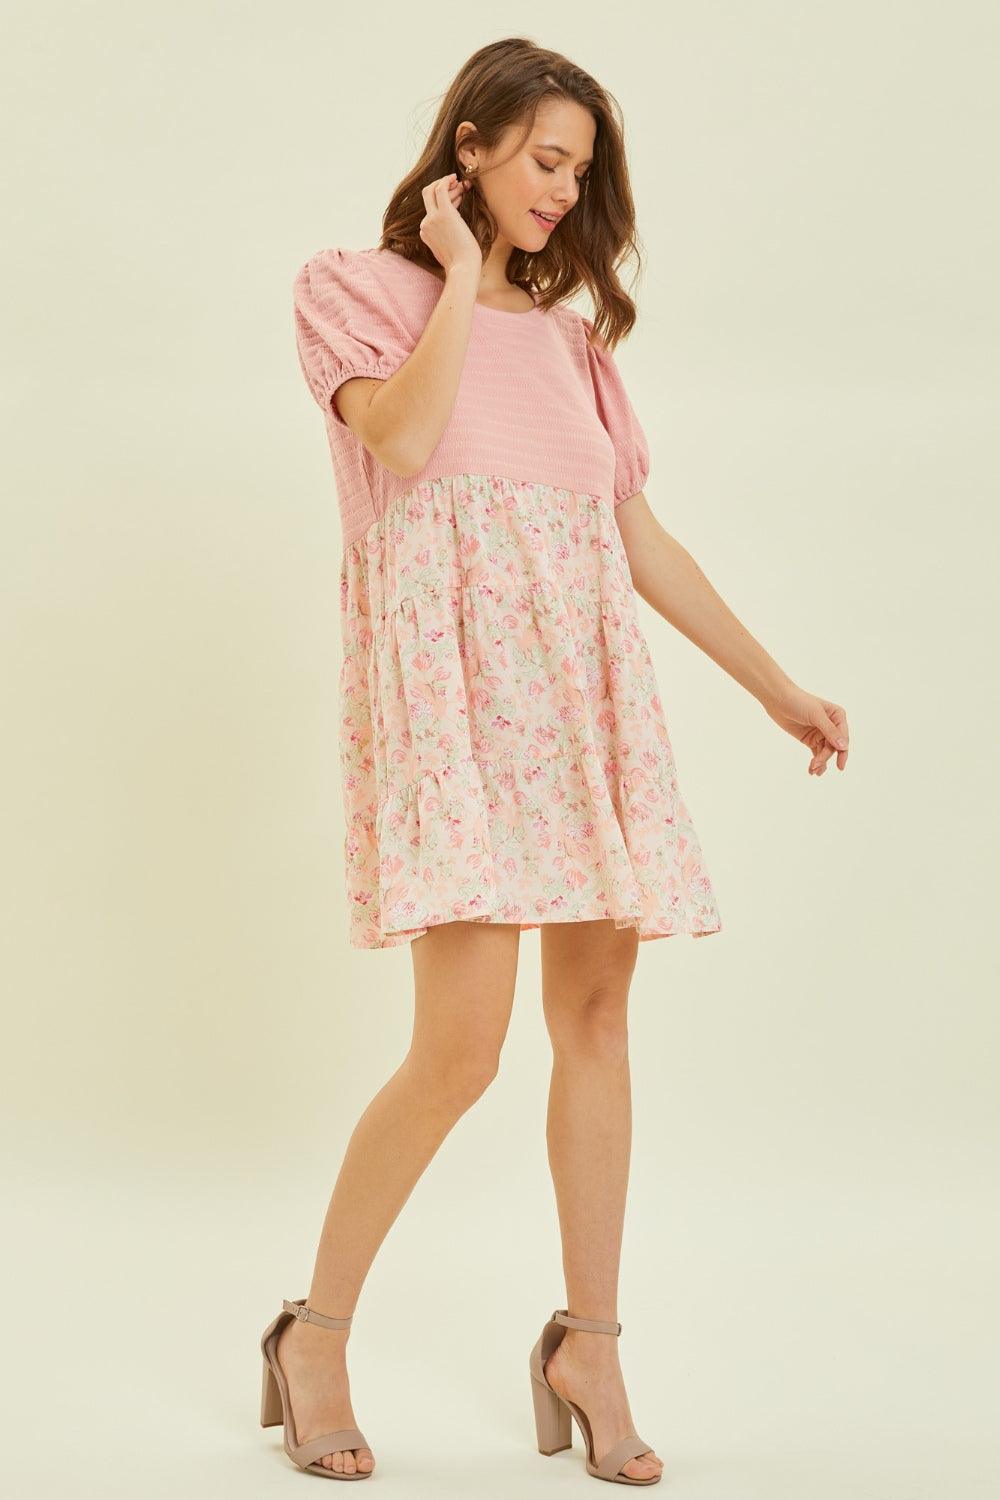 HEYSON Full Size Round Neck Floral Ruffle Hem Mini Dress - AMIClubwear